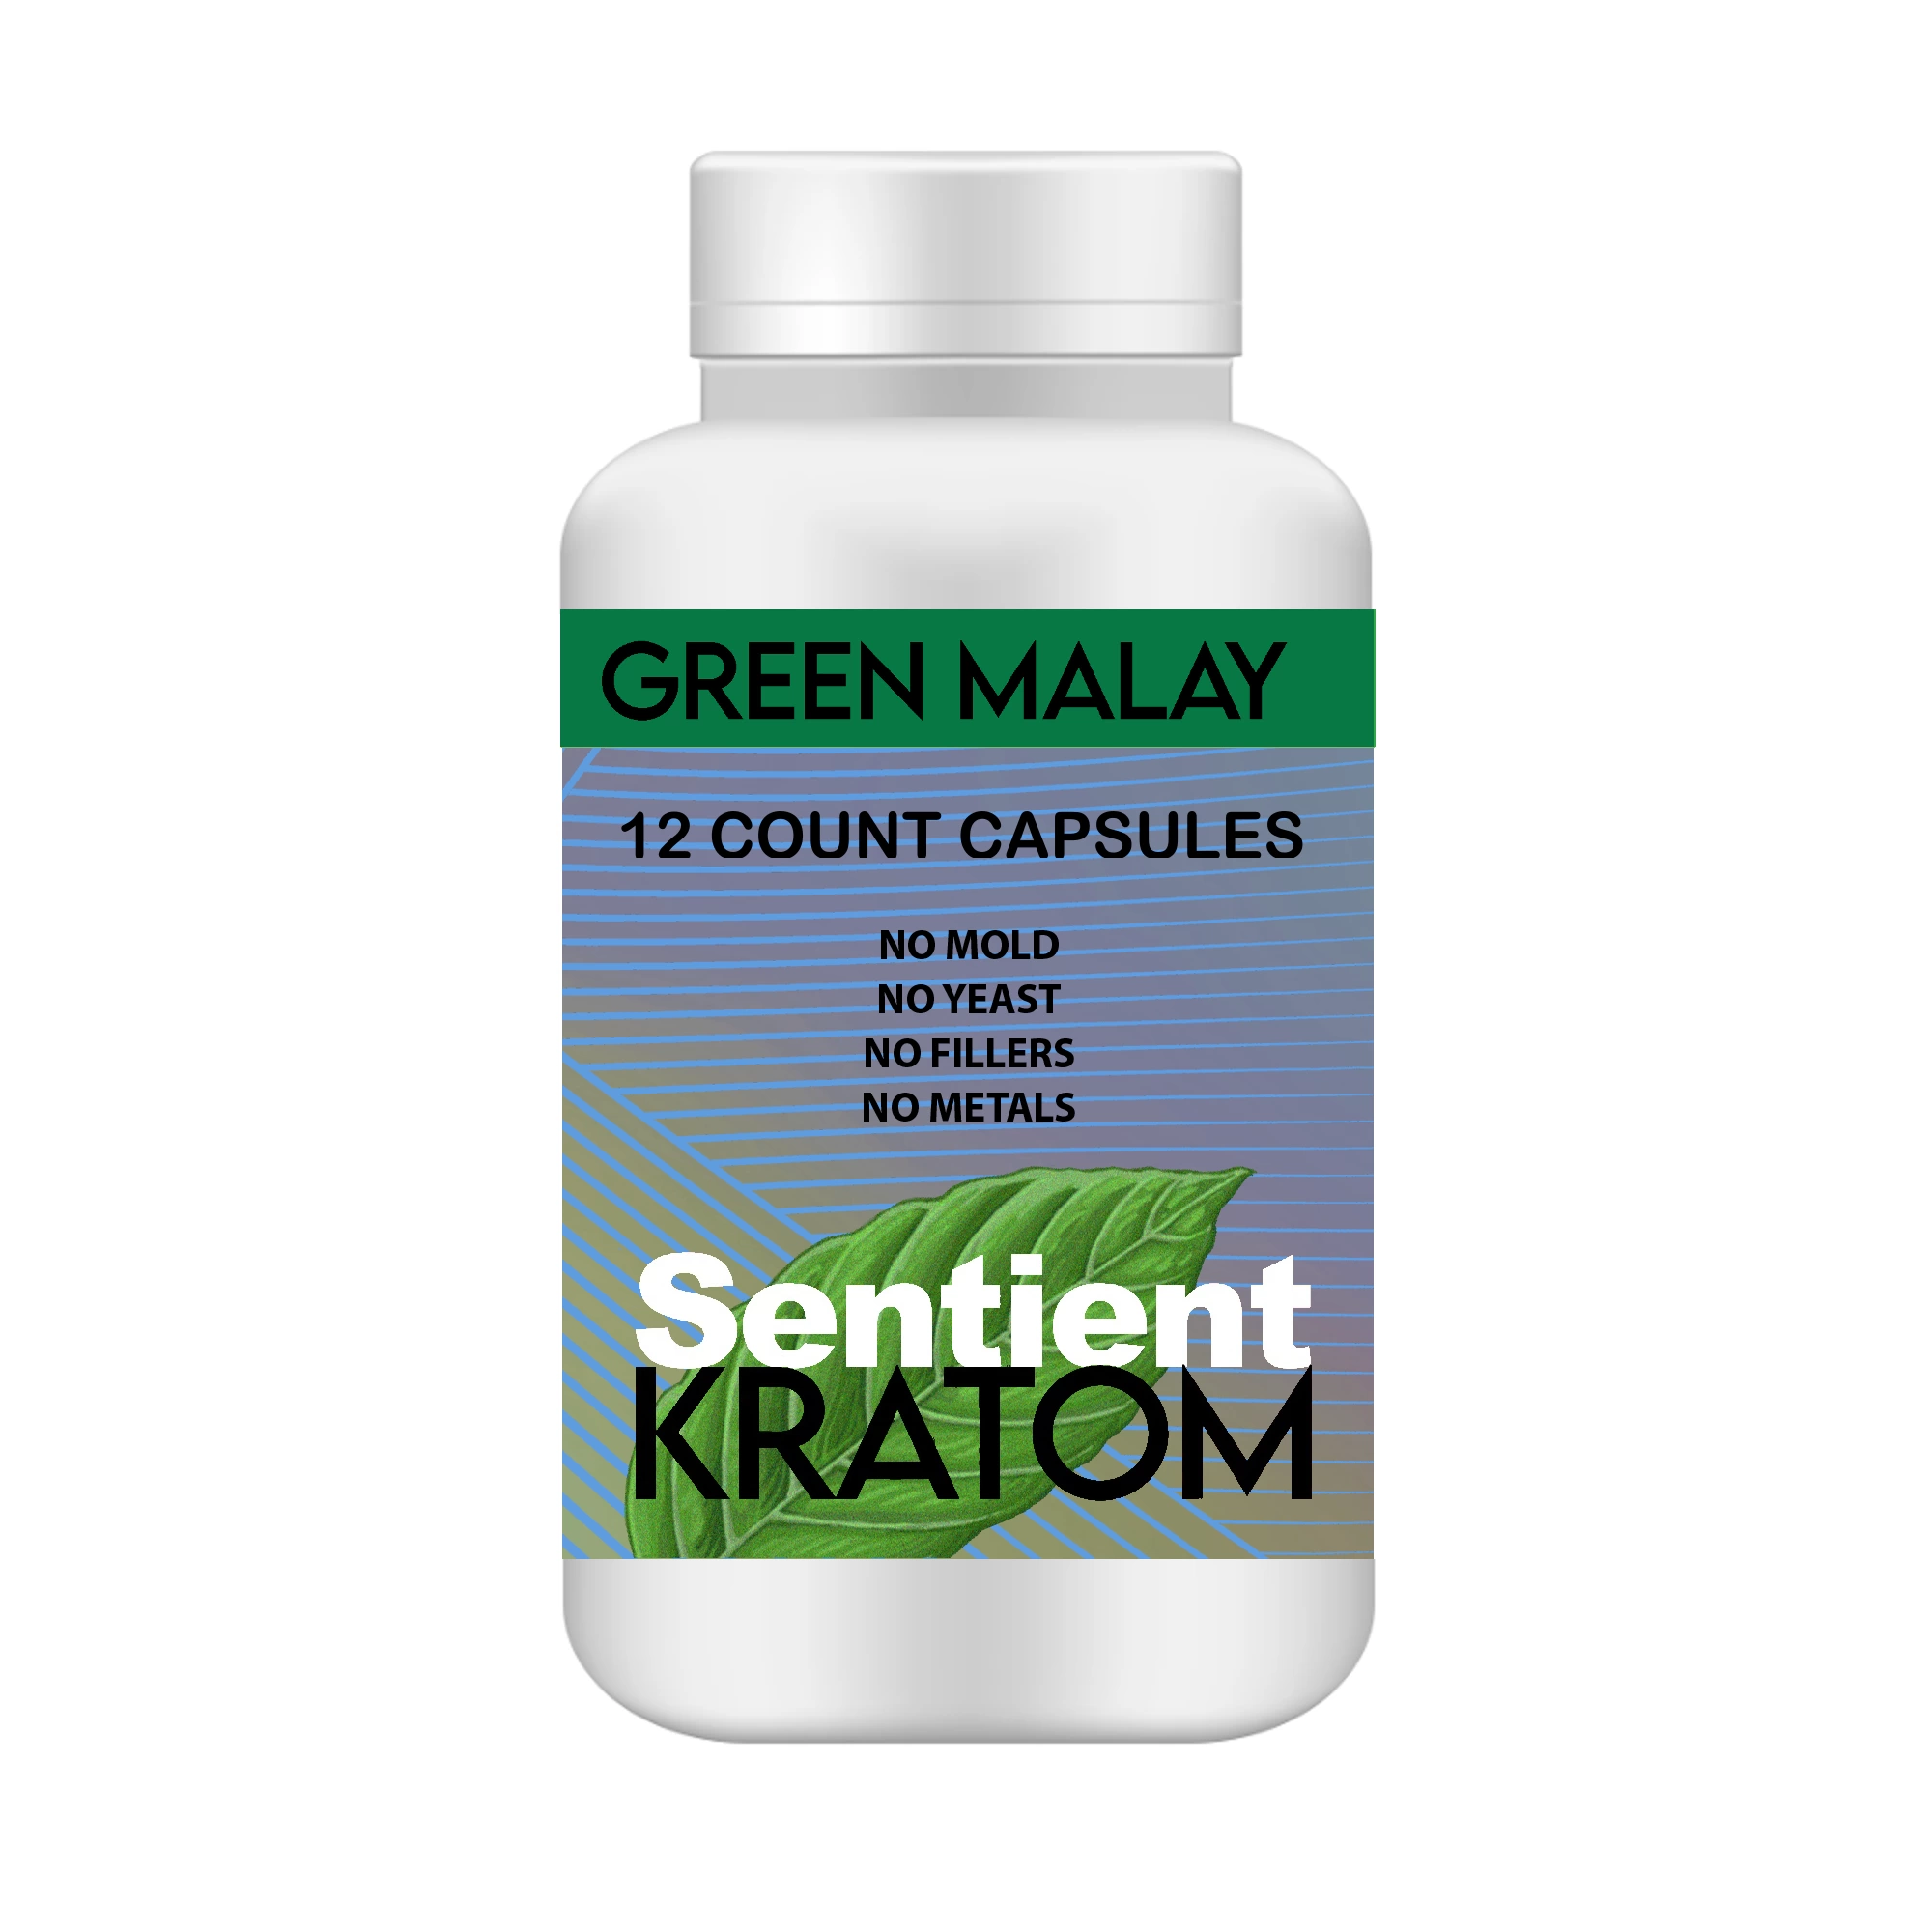 Green Malay Kratom 12ct